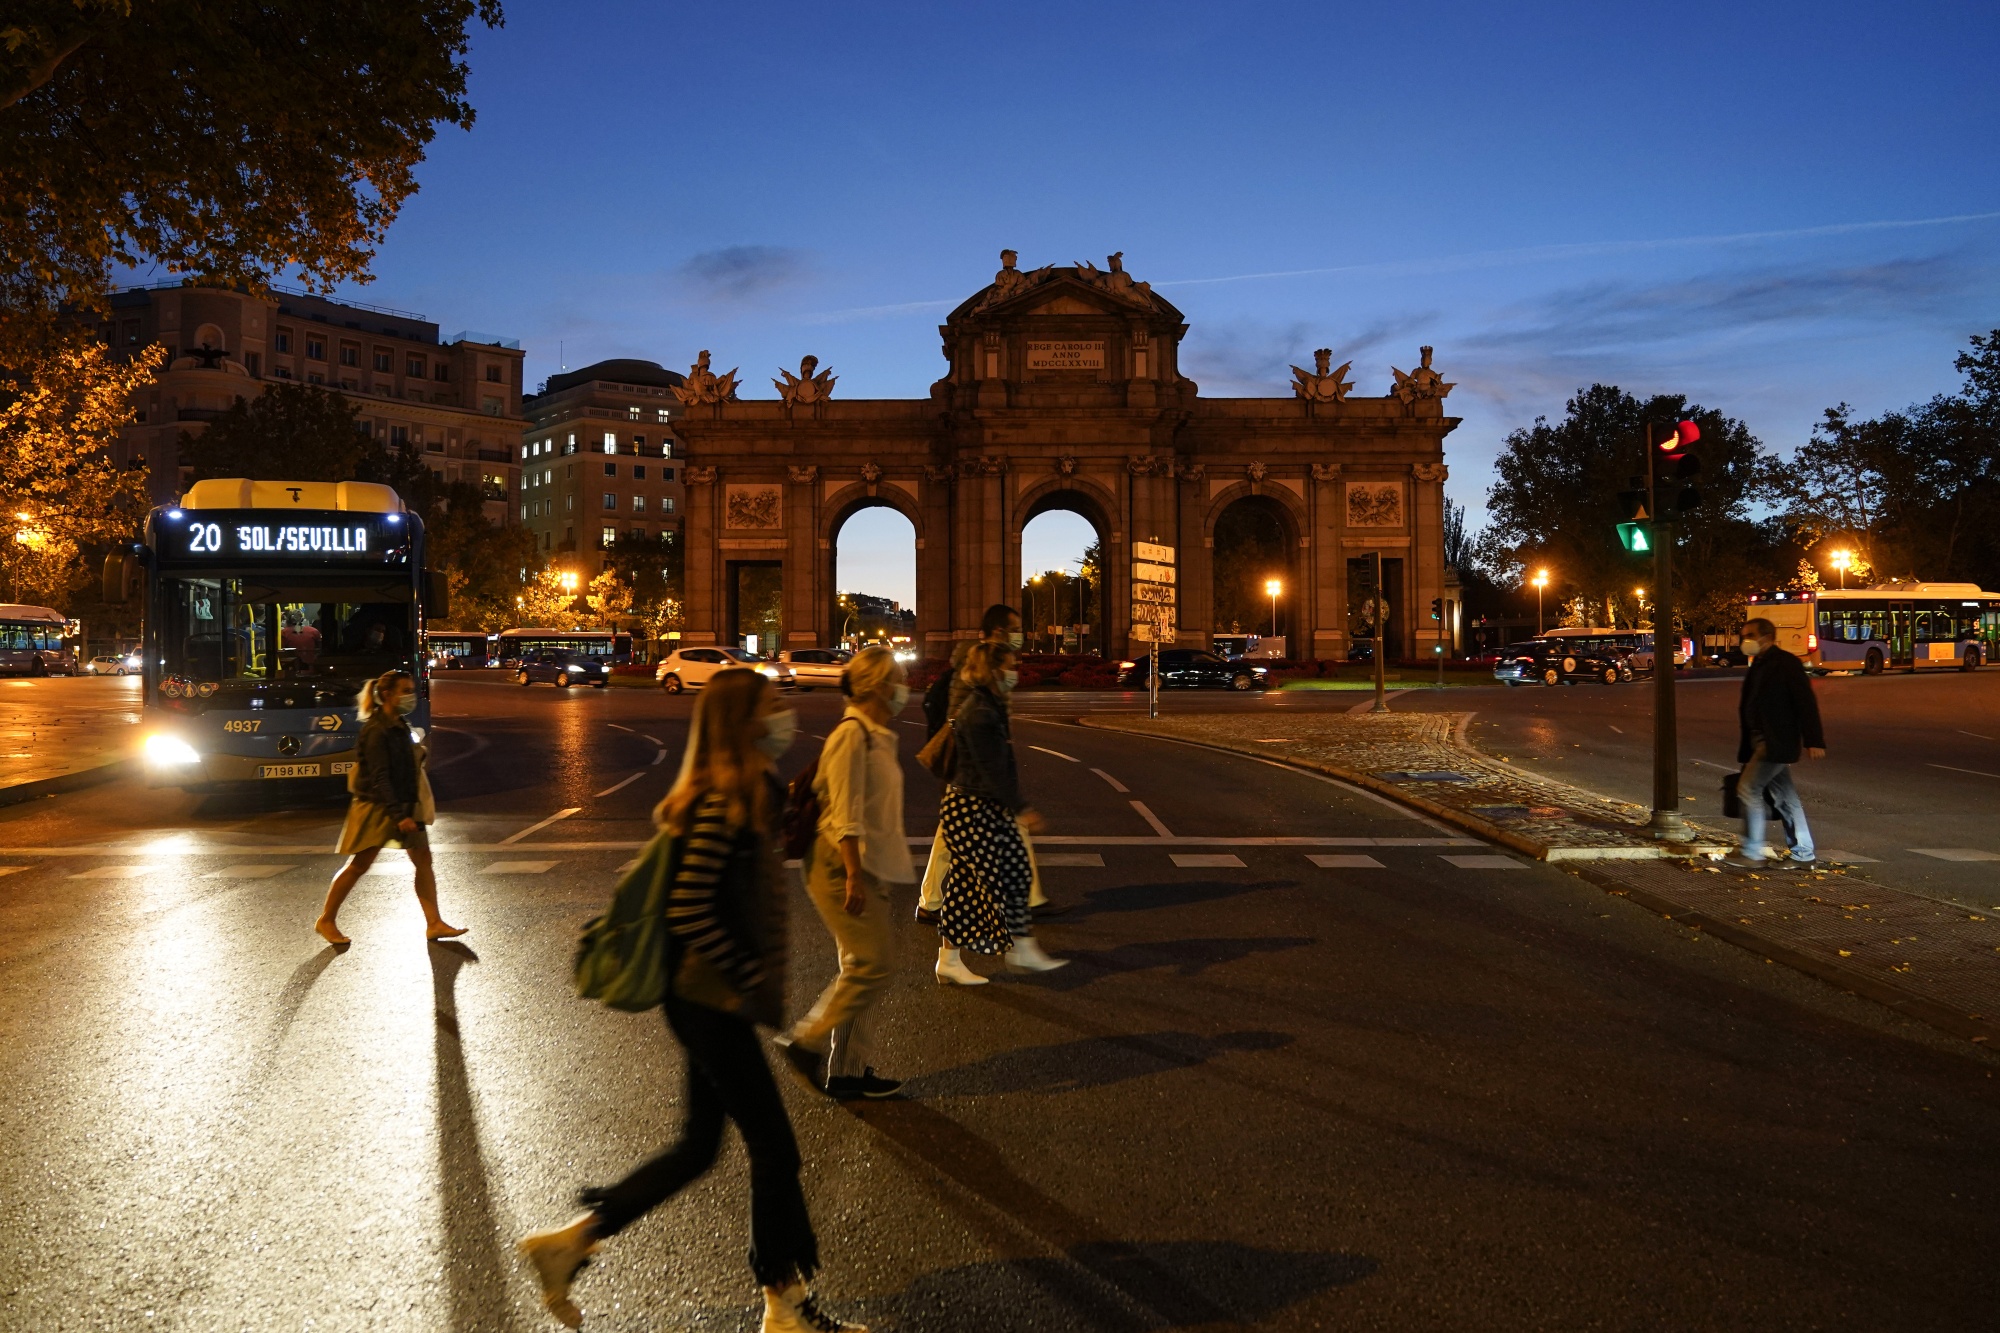 Spanish Capital Under Lockdown as Alarm in Europe Grows